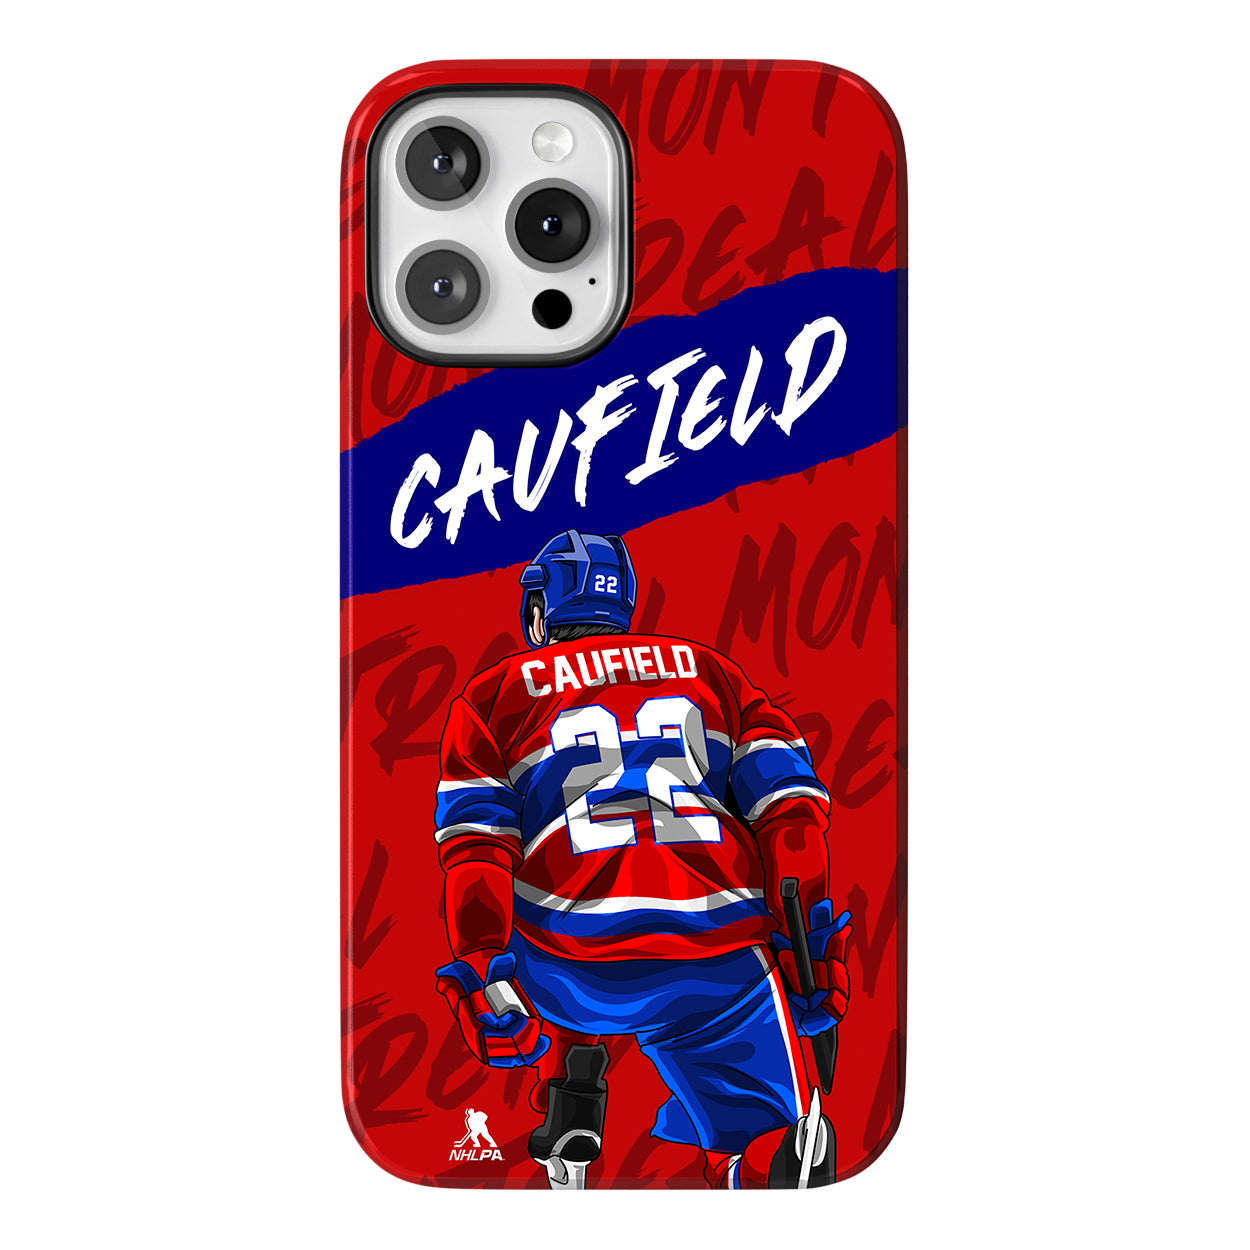 Caufield Star Series 3.0 Phone Case